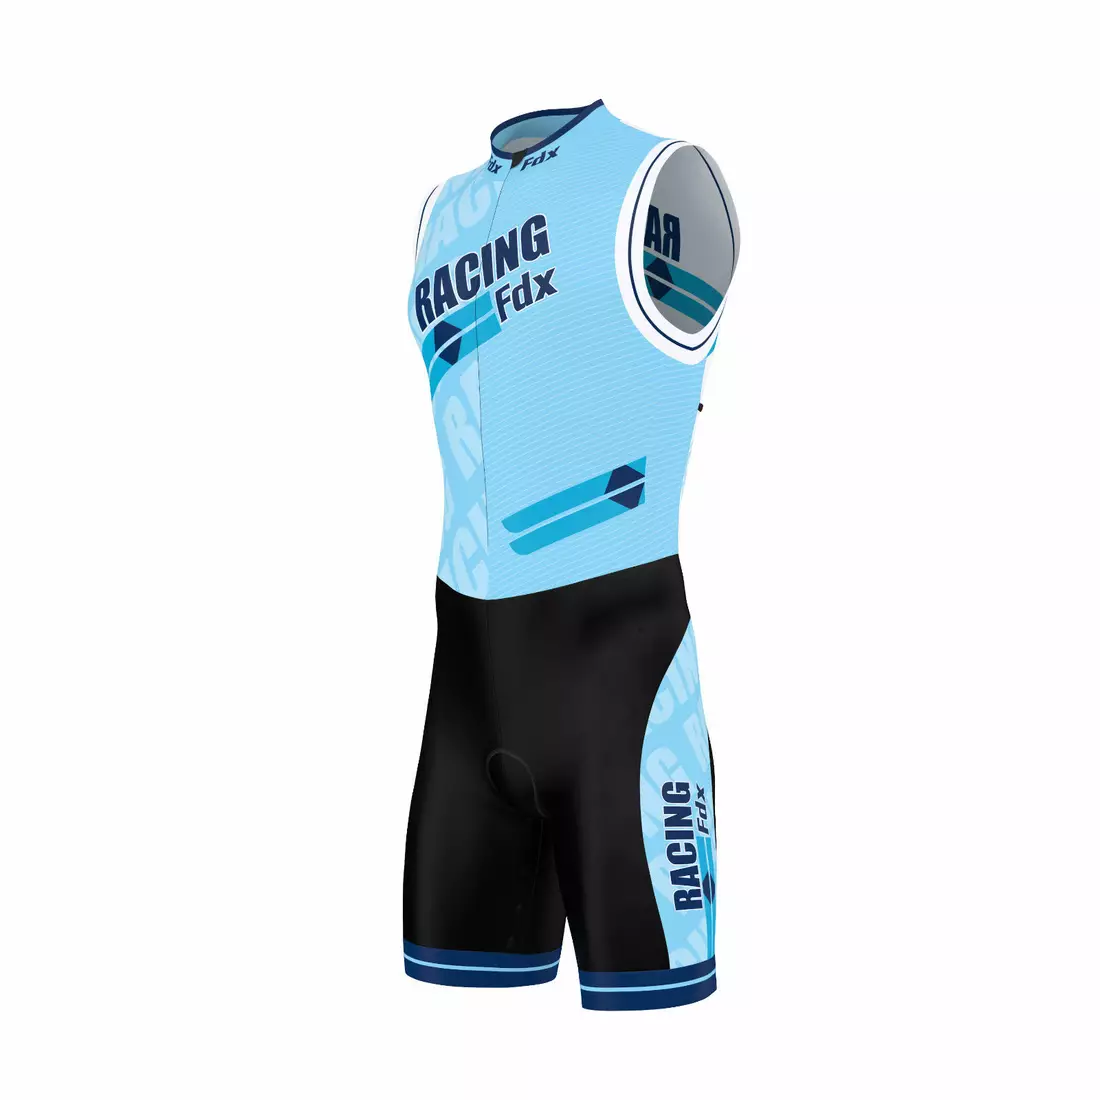 FDX 1050 triathlon suit black and blue